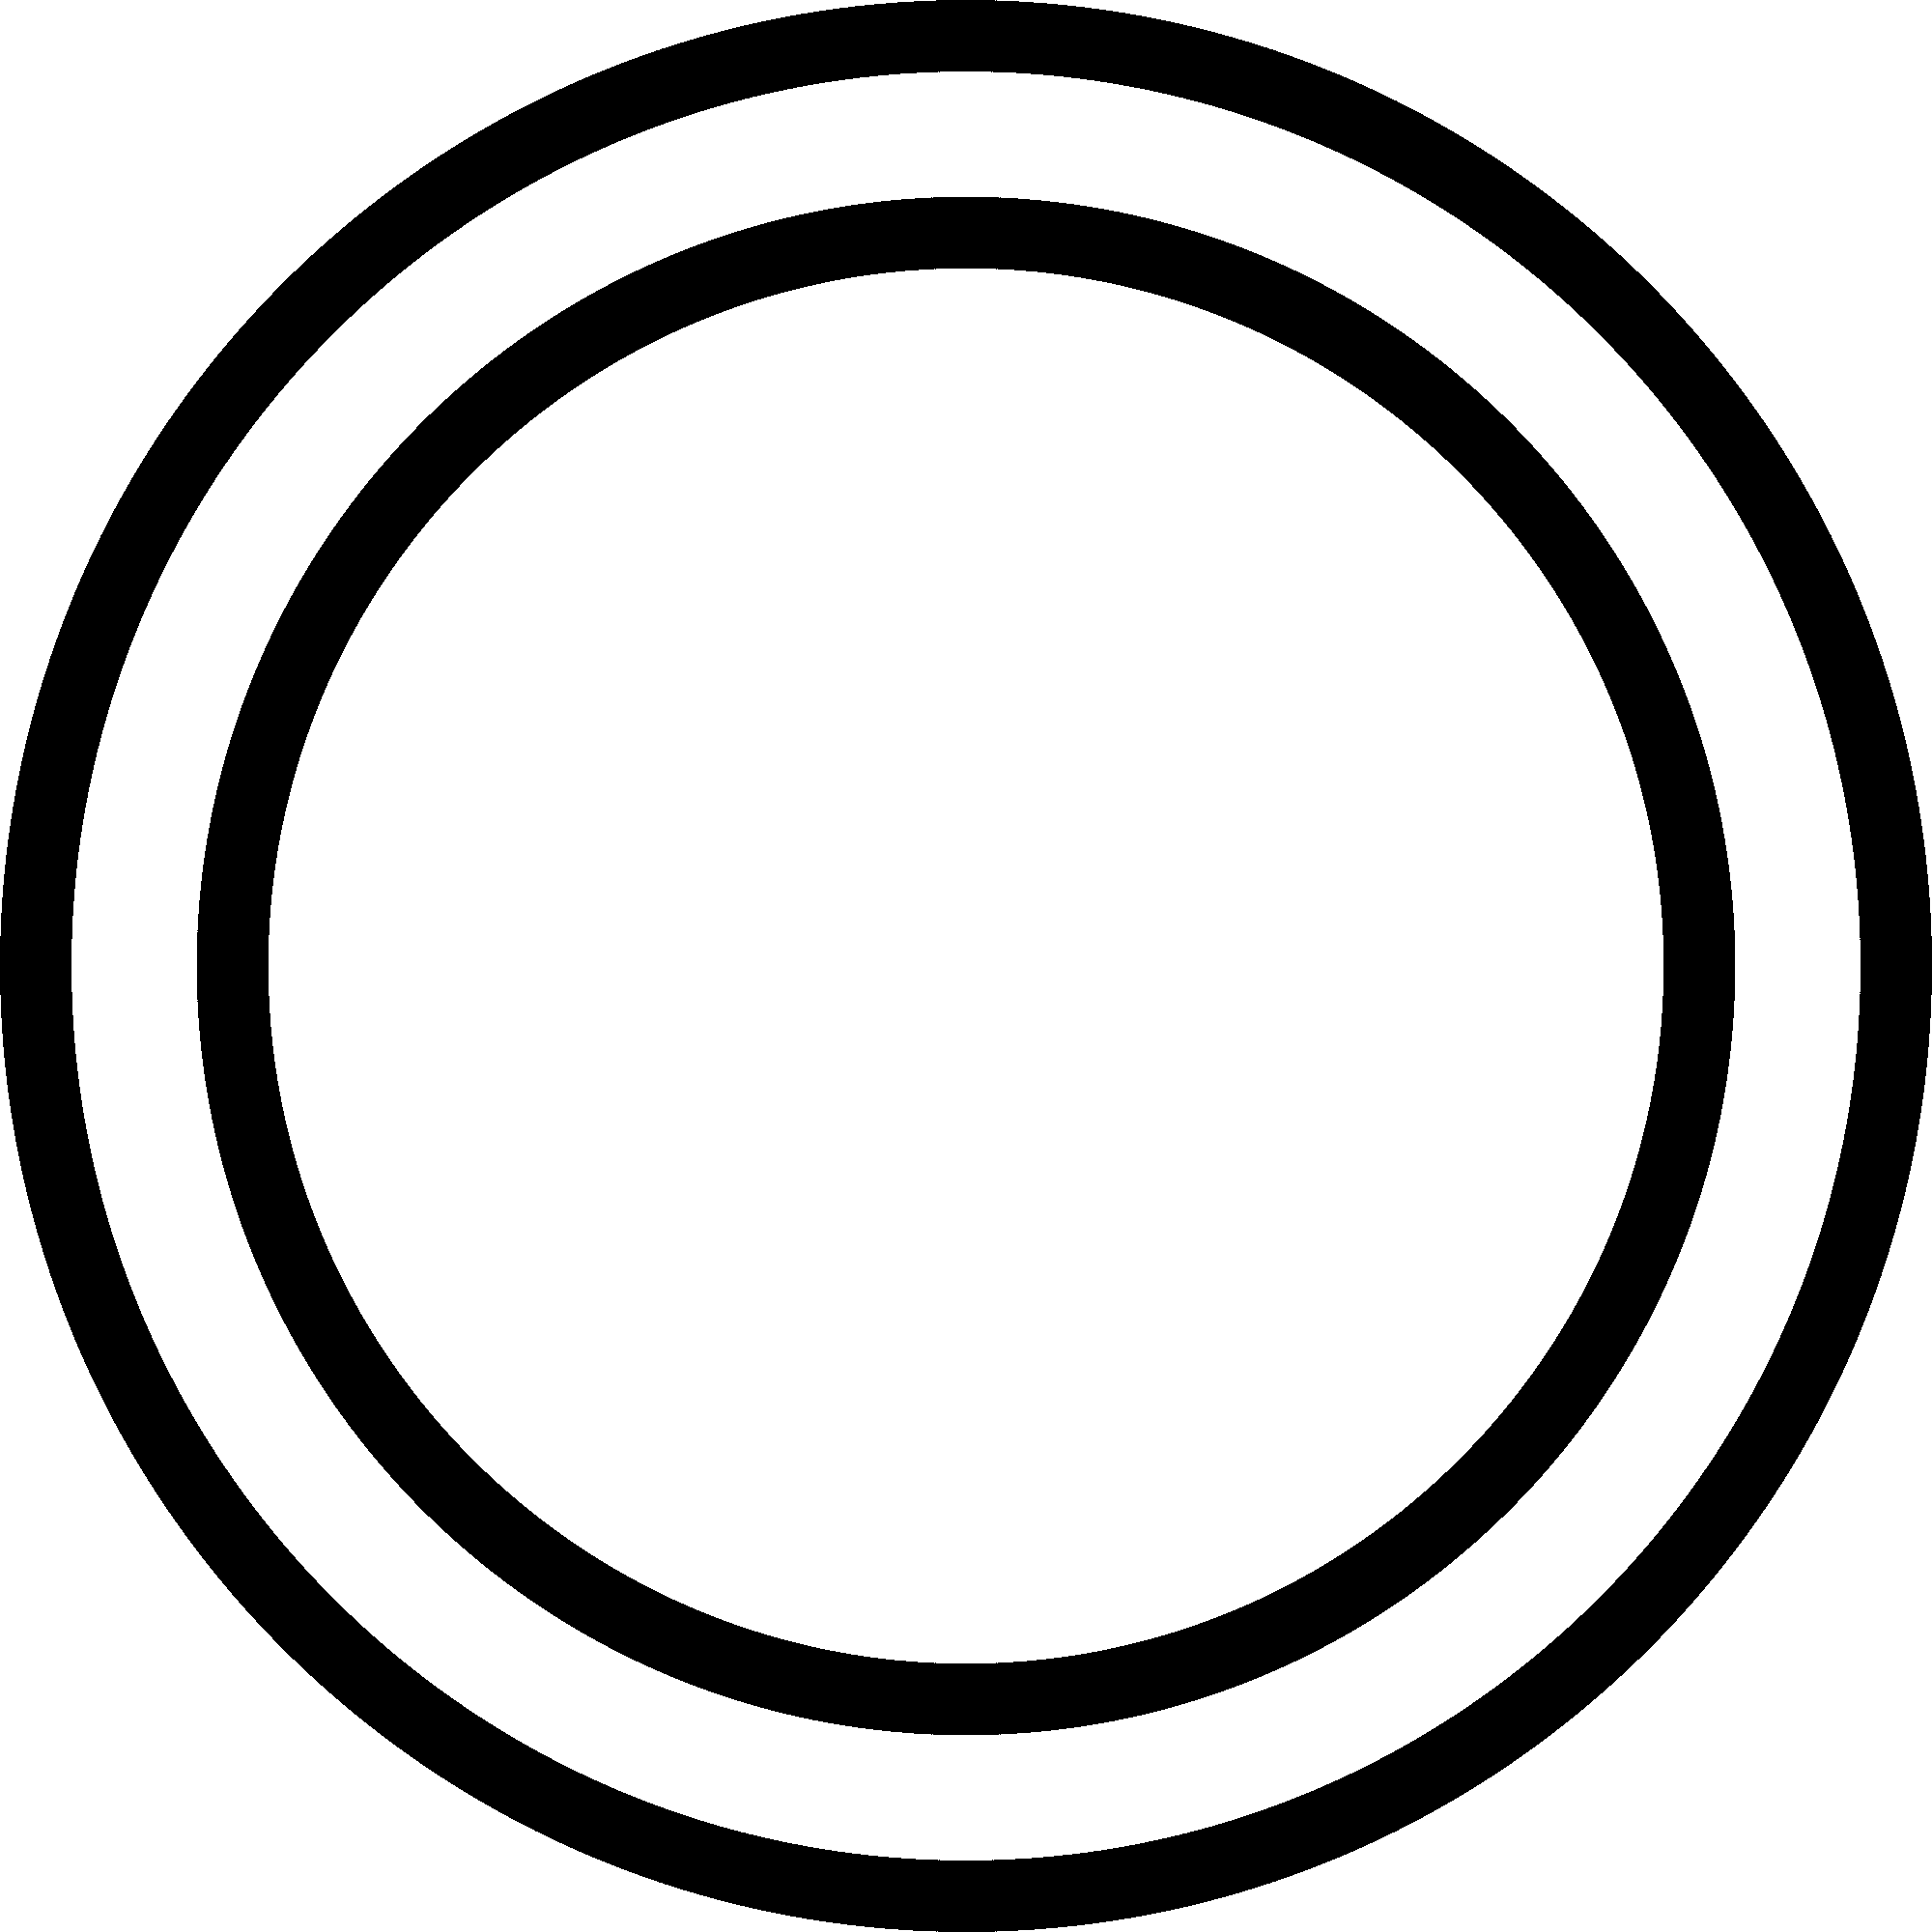 Circle Frames Floral Logo Design Vector Graphic by sore88 · Creative Fabrica